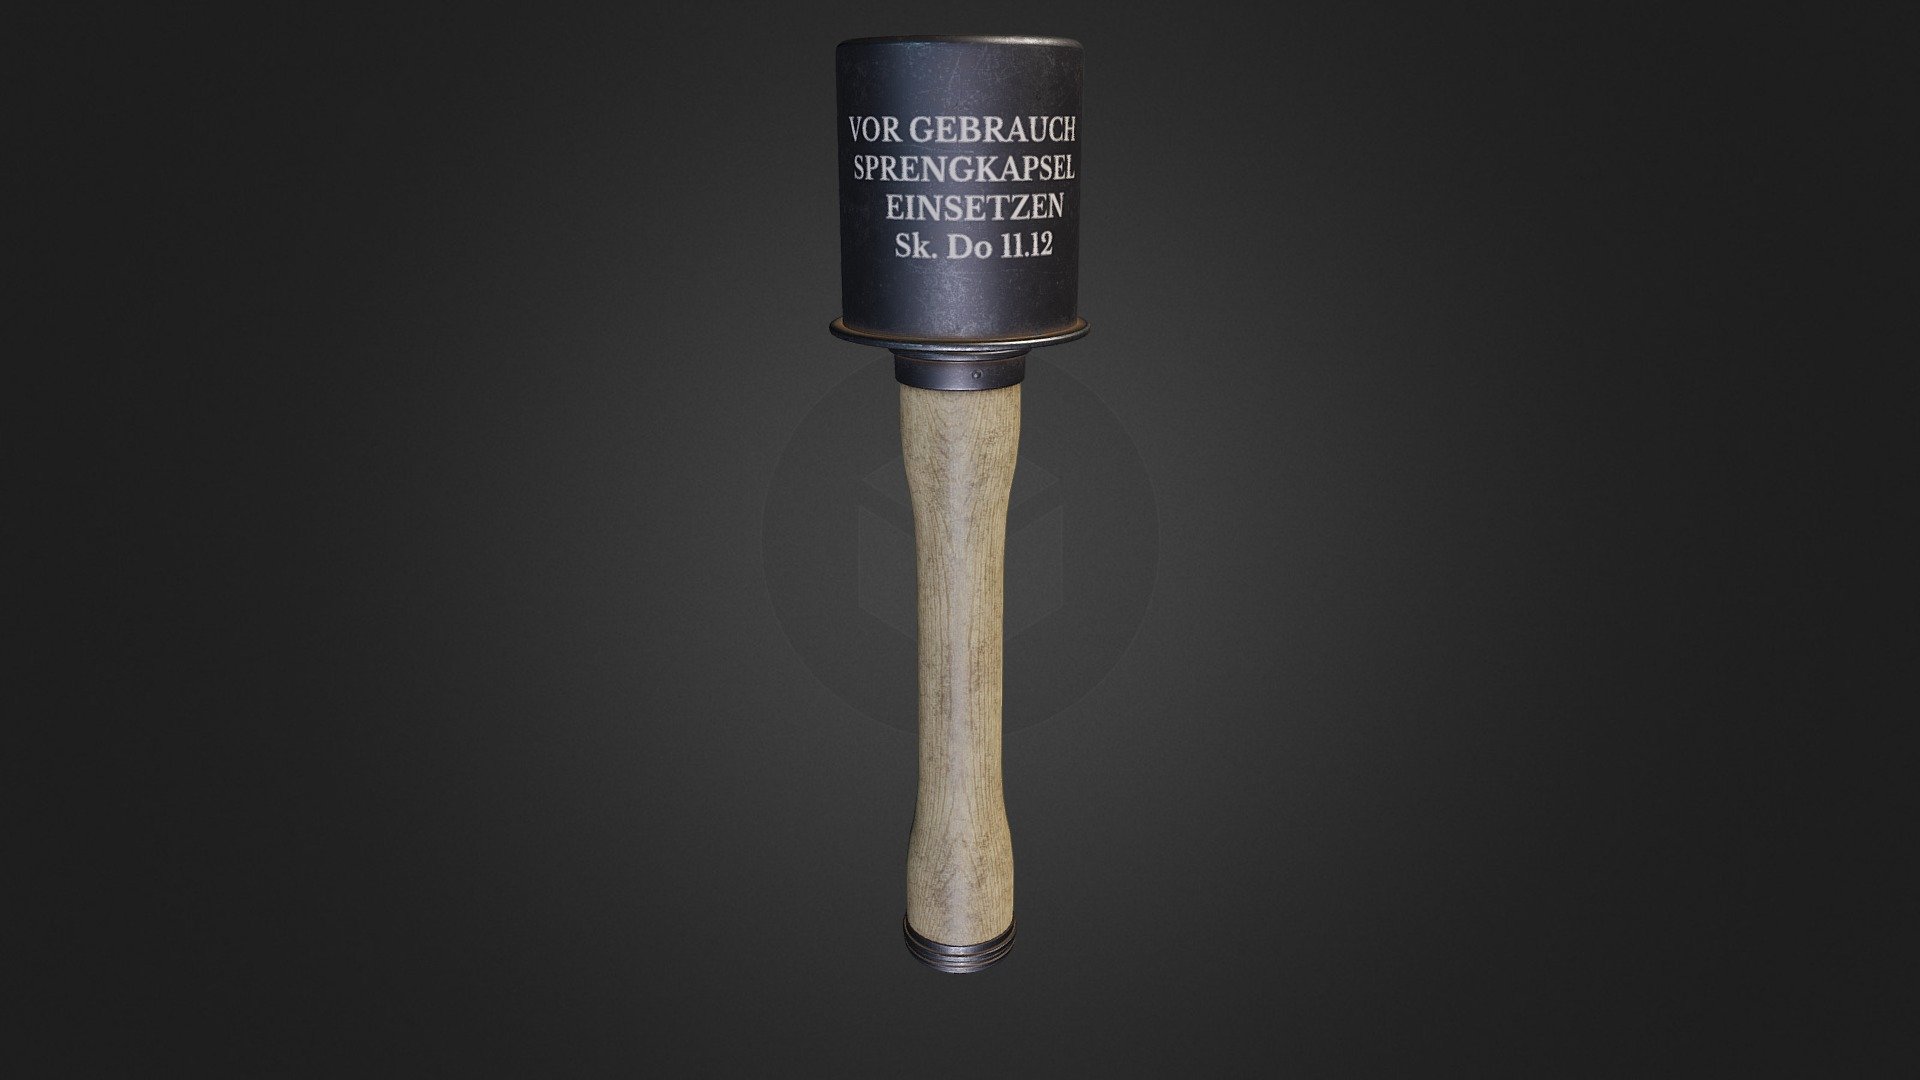 Stielhandgranate German Hand Grenade